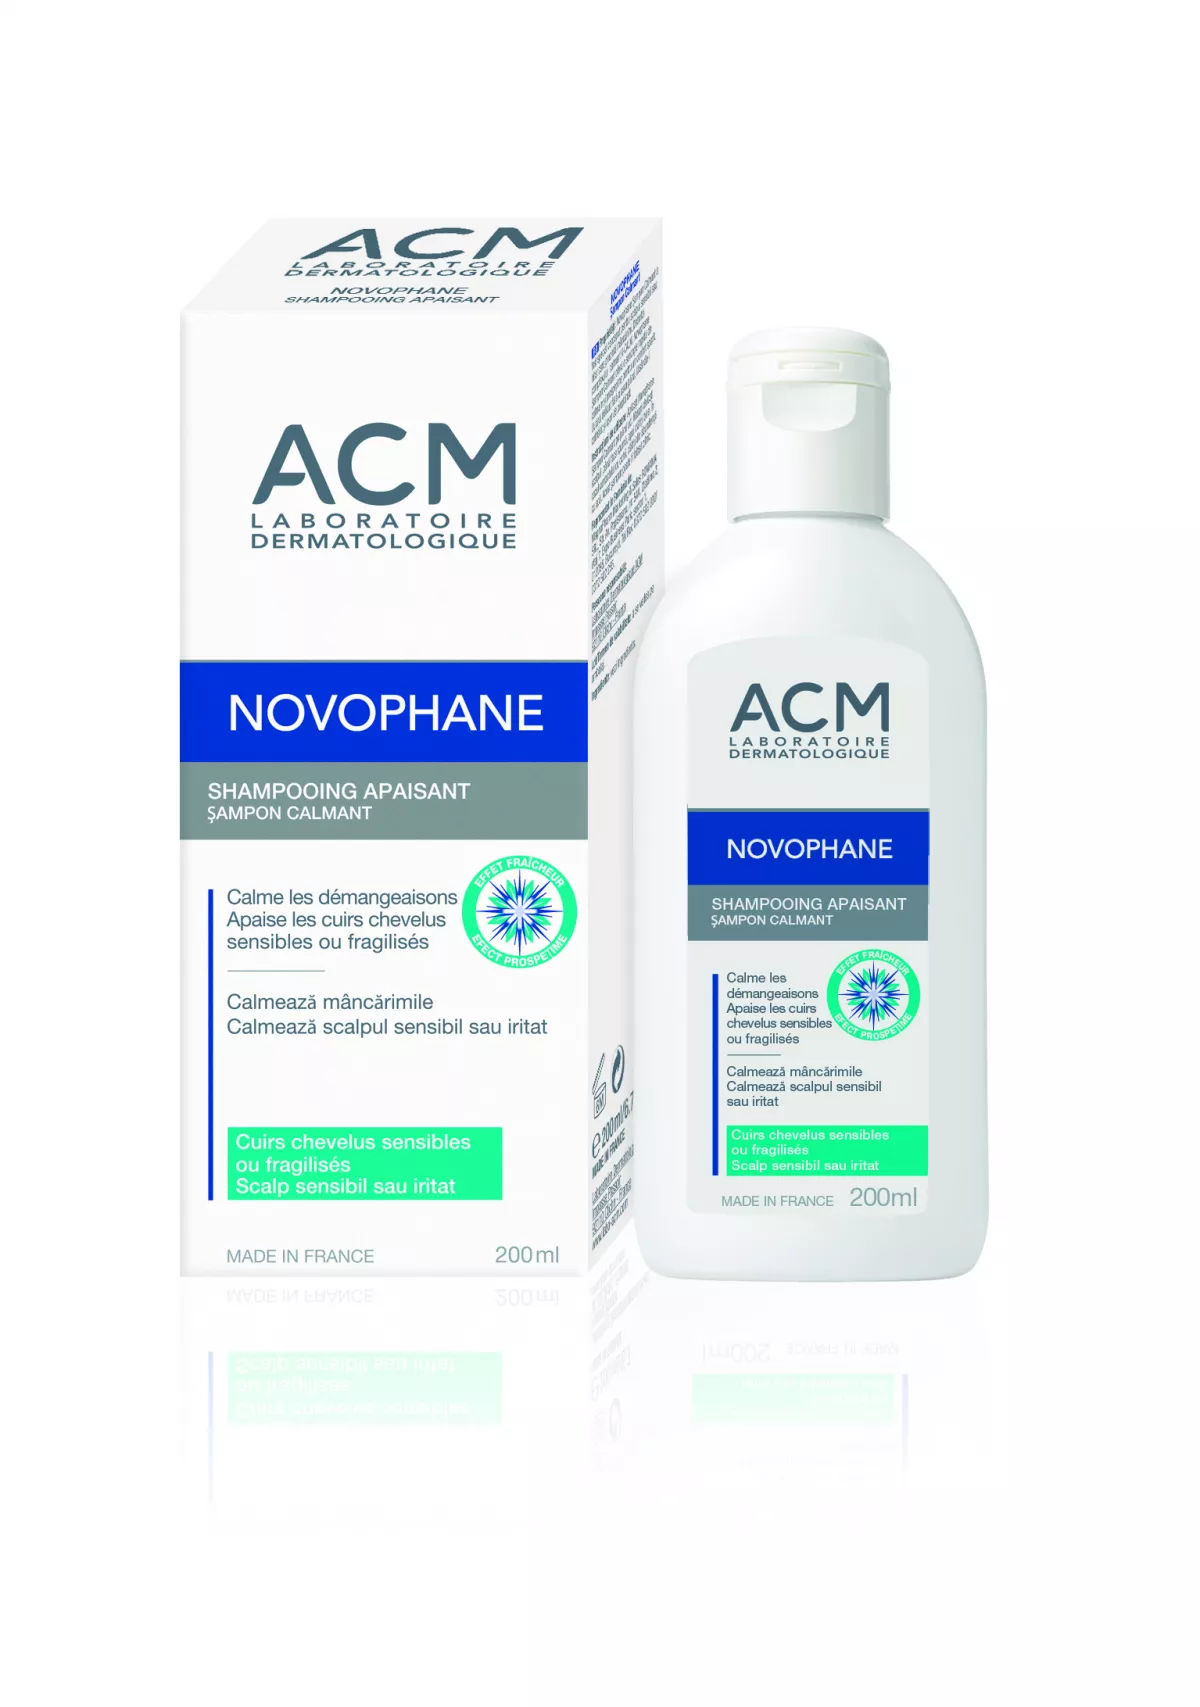 ACM Novophane sampon calmant 200ml, [],epastila.ro